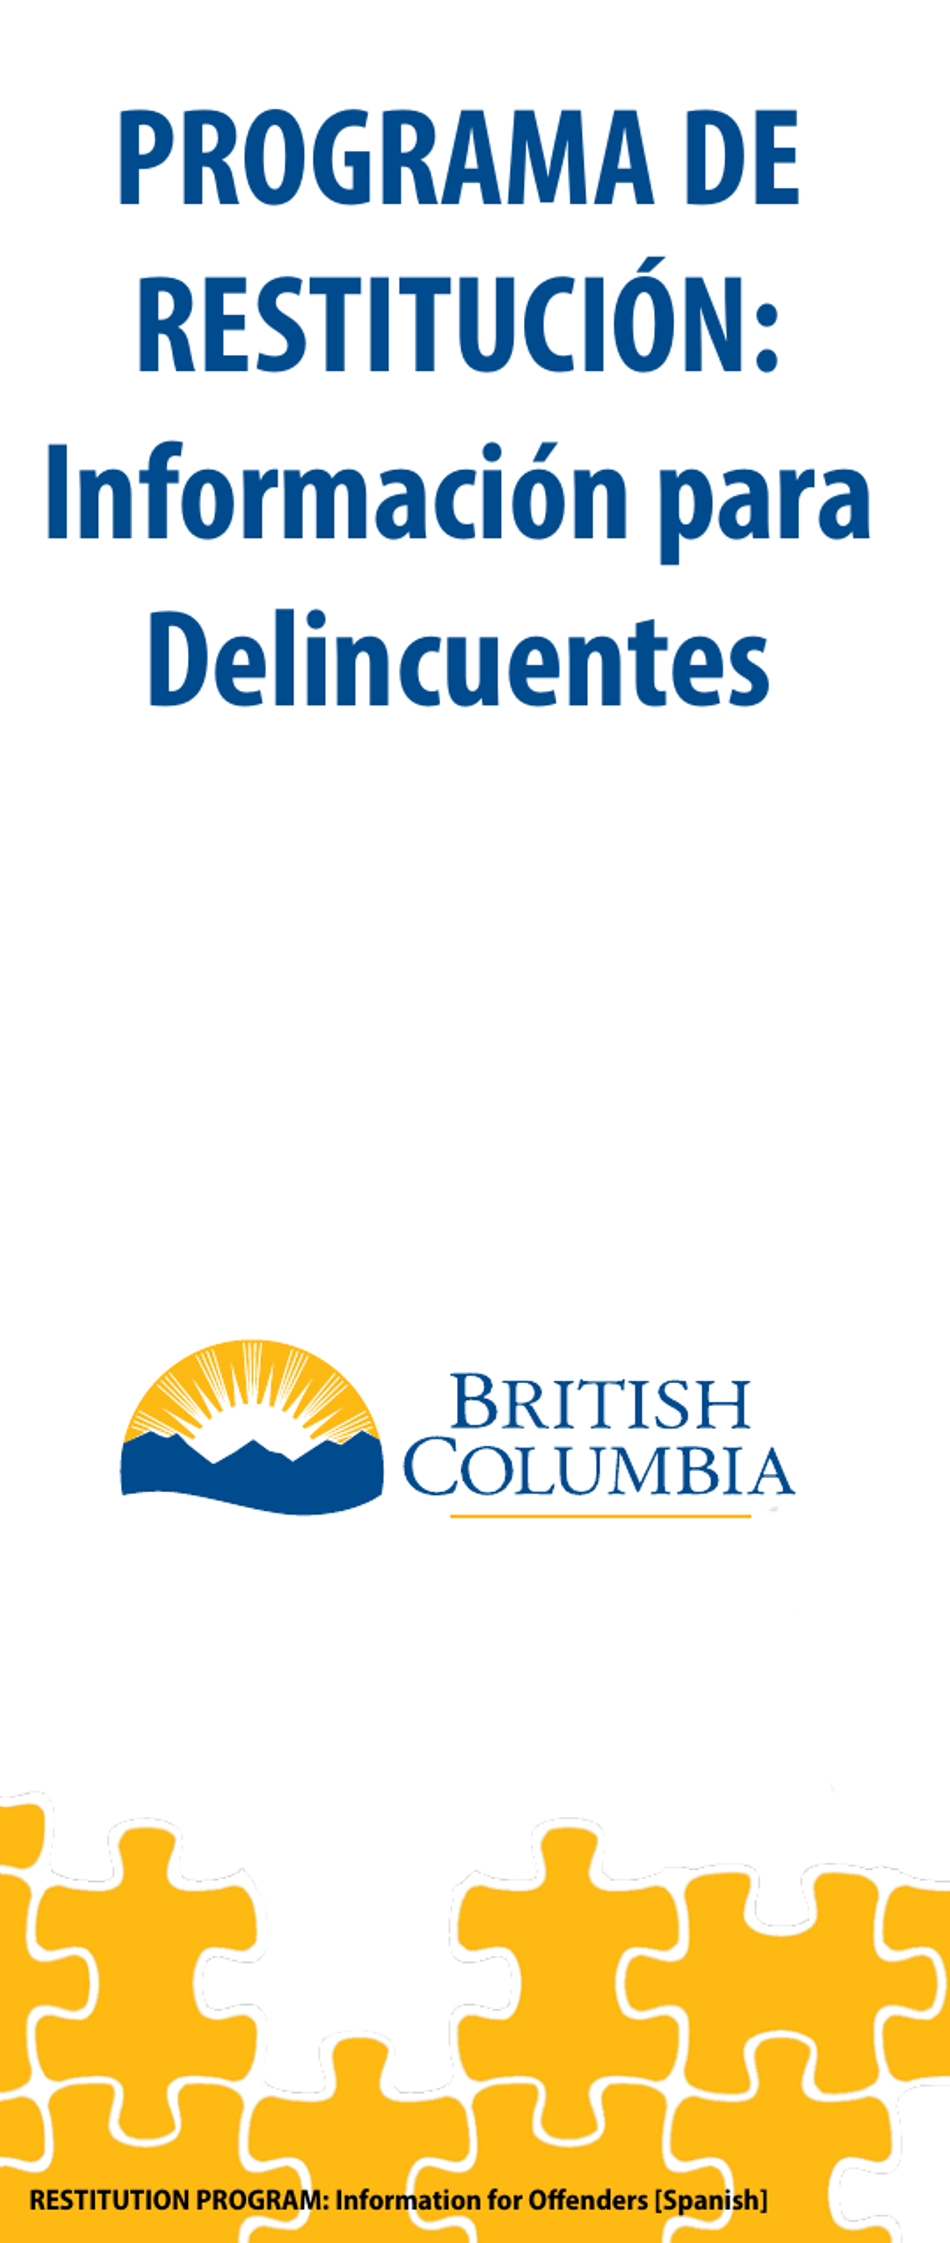 Restitution Program Application Form - British Columbia, Canada (English / Spanish), Page 1